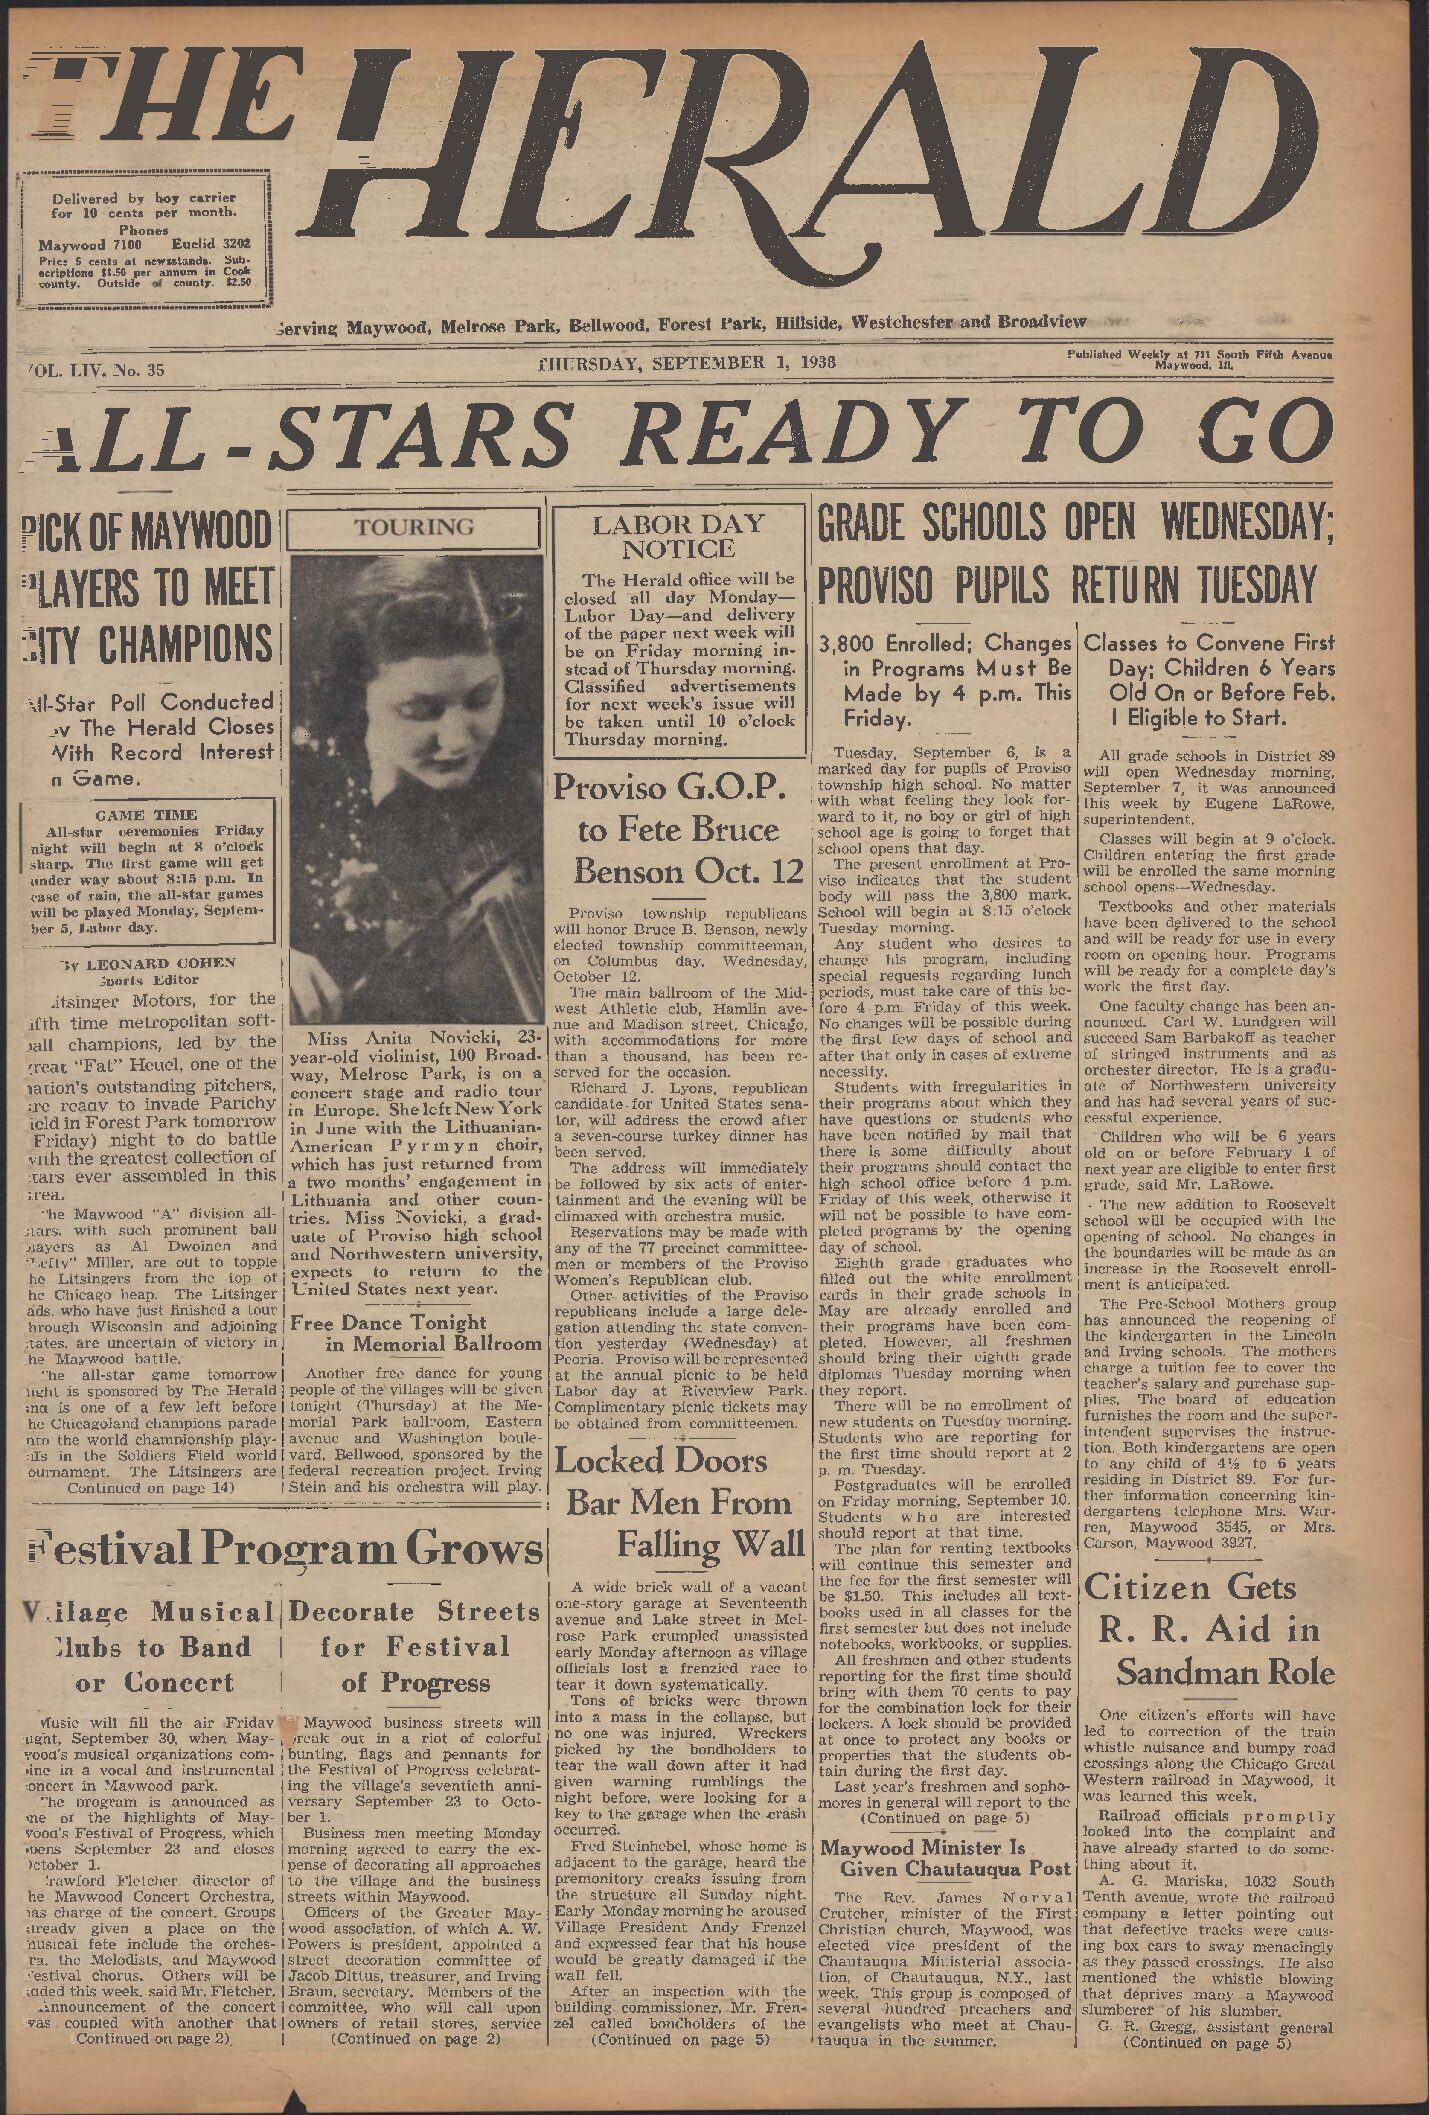 The Herald – 19380901